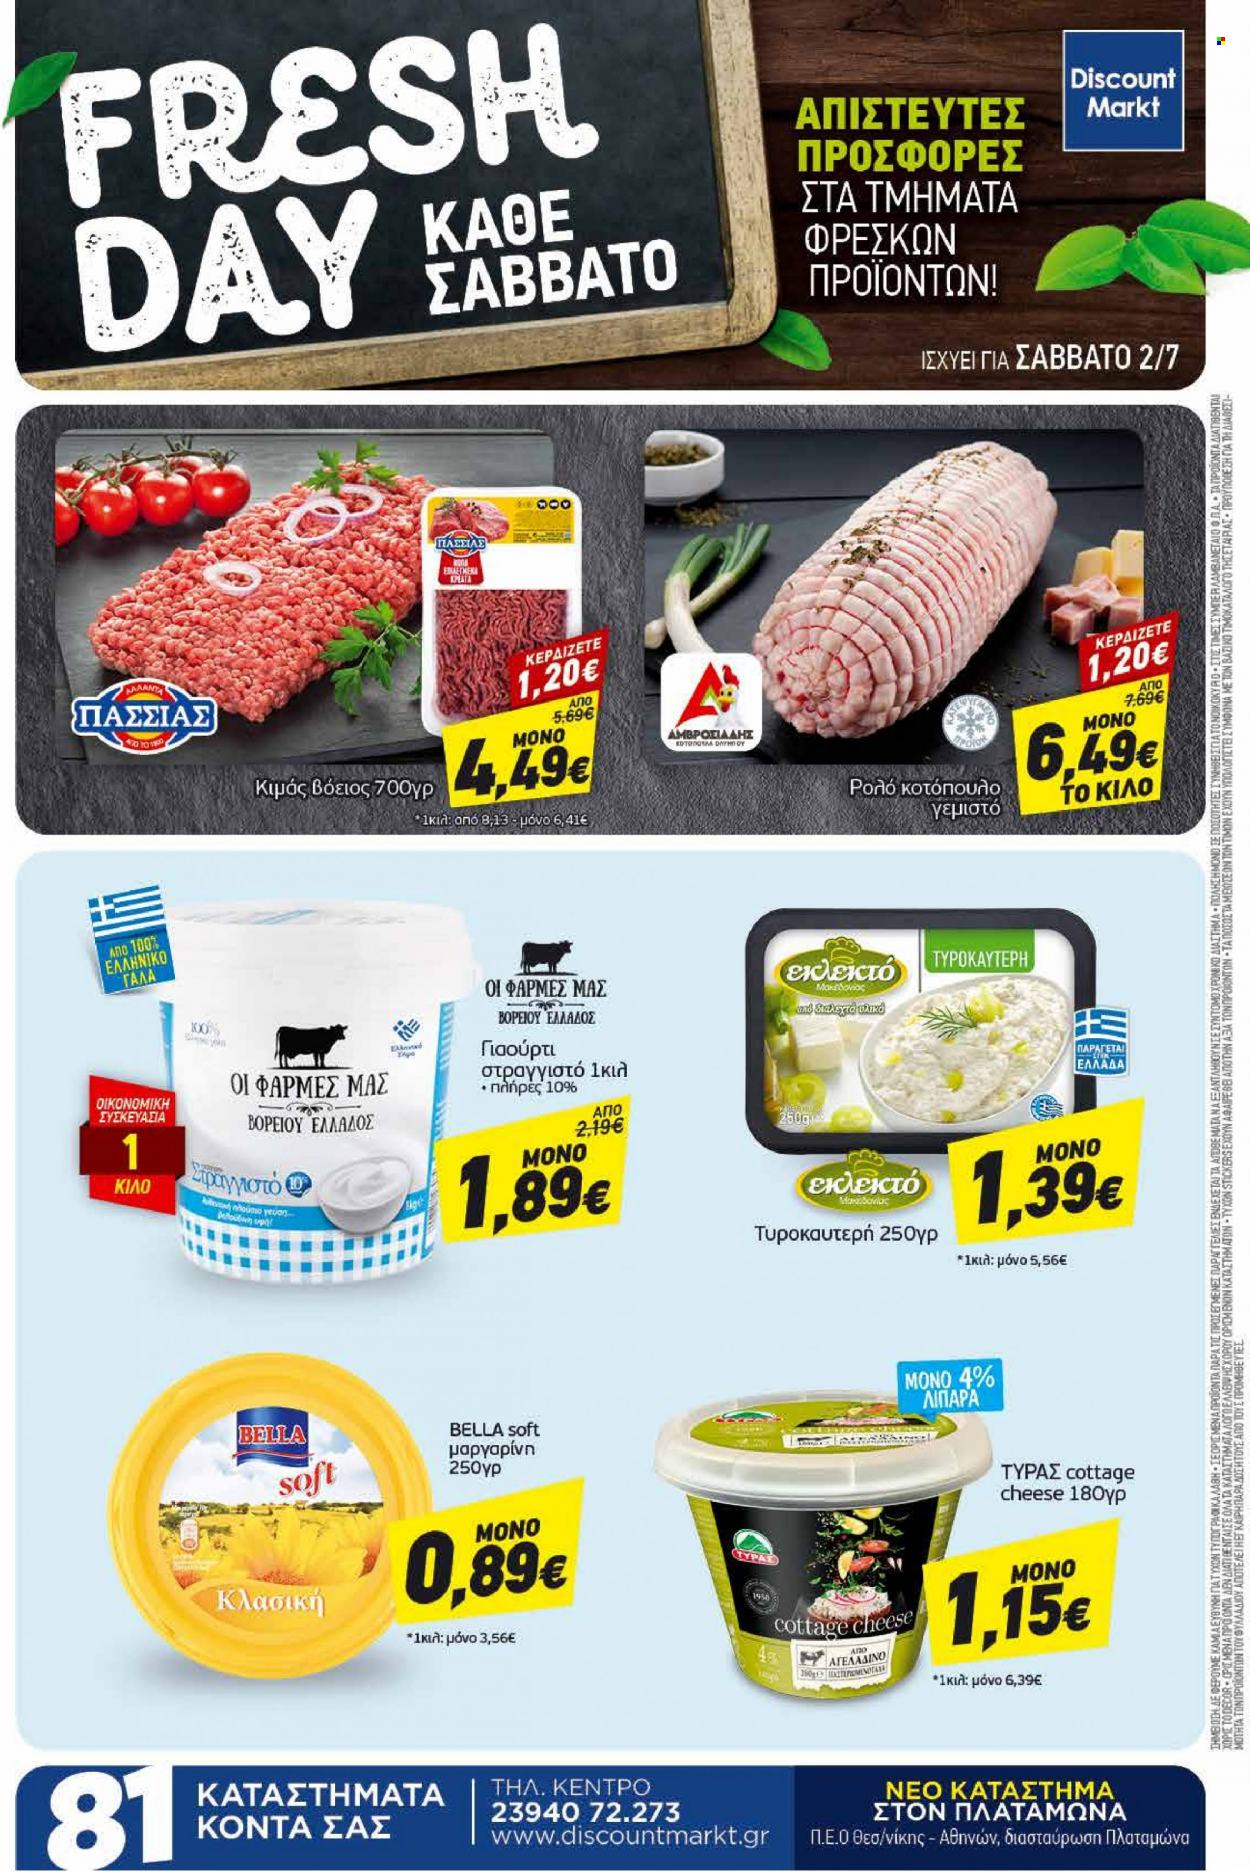 thumbnail - Φυλλάδια Discount Markt - 27.06.2022 - 02.07.2022 - Εκπτωτικά προϊόντα - κοτόπουλο, ρολό, γιαούρτι, γάλα, μαργαρίνη. Σελίδα 20.